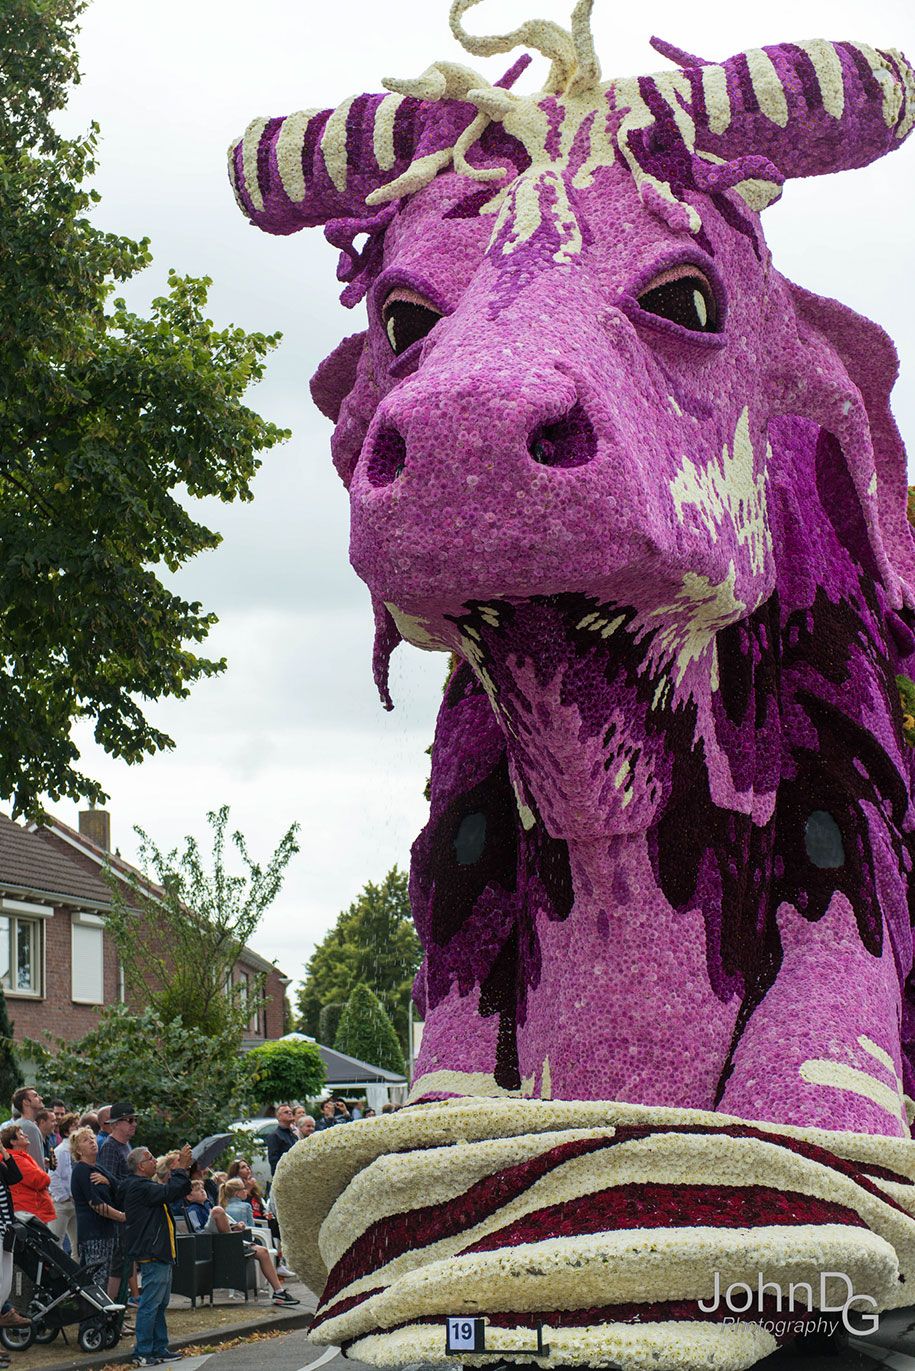 gigantische-bloem-sculptuur-parade-corso-zundert-2016-nederland-11